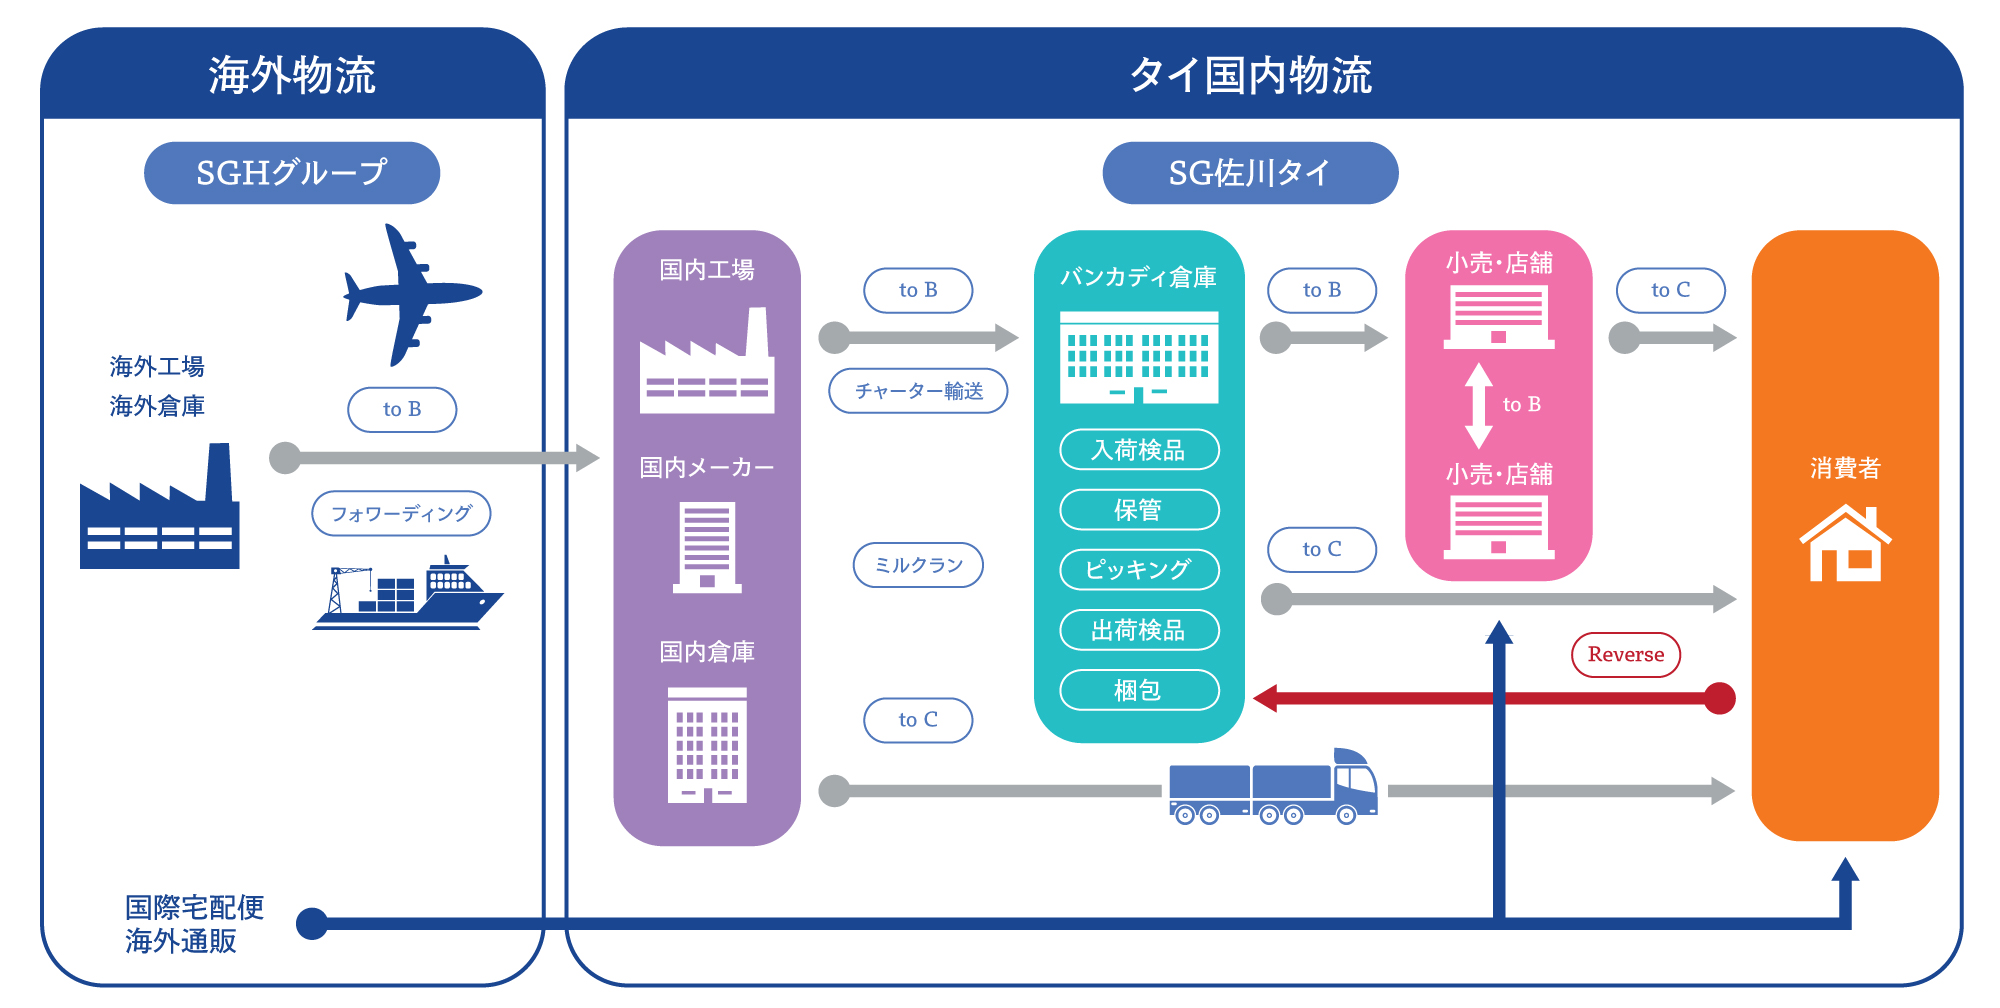 SG 佐川タイ 3PL倉庫保管のサポートマップ